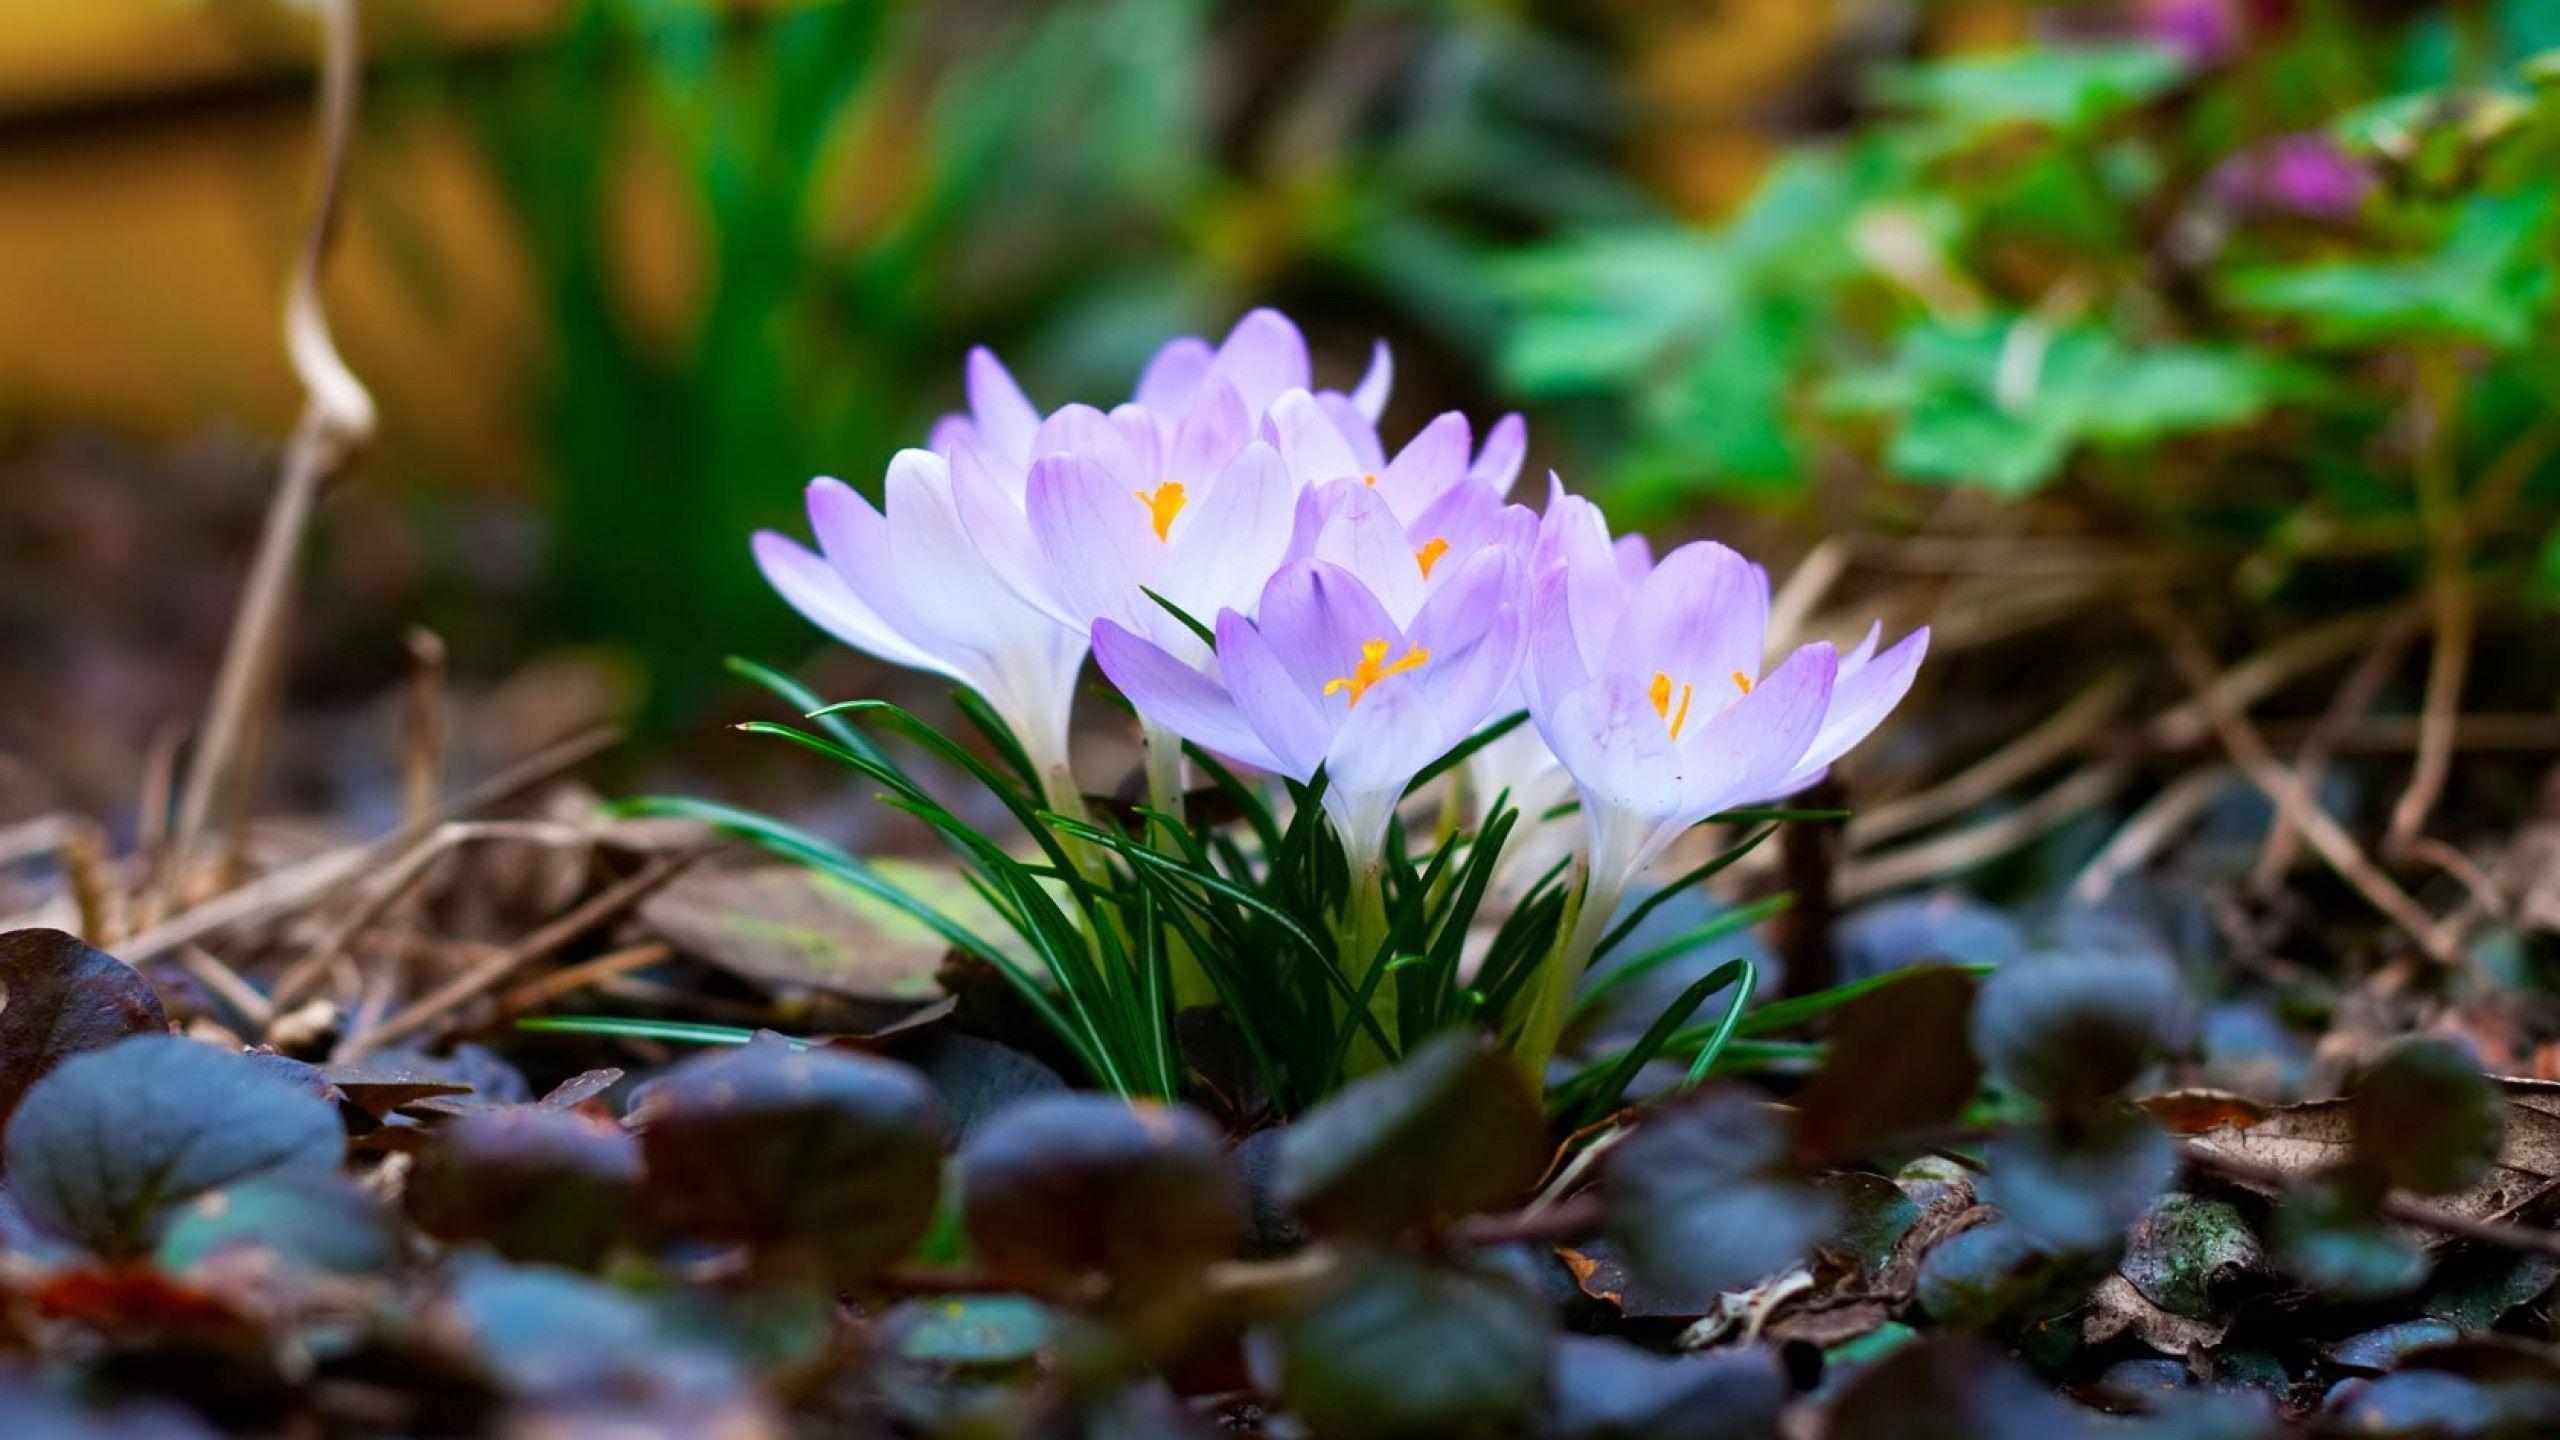 Cool Spring Flowers HD Desktop Wallpaper Free Download